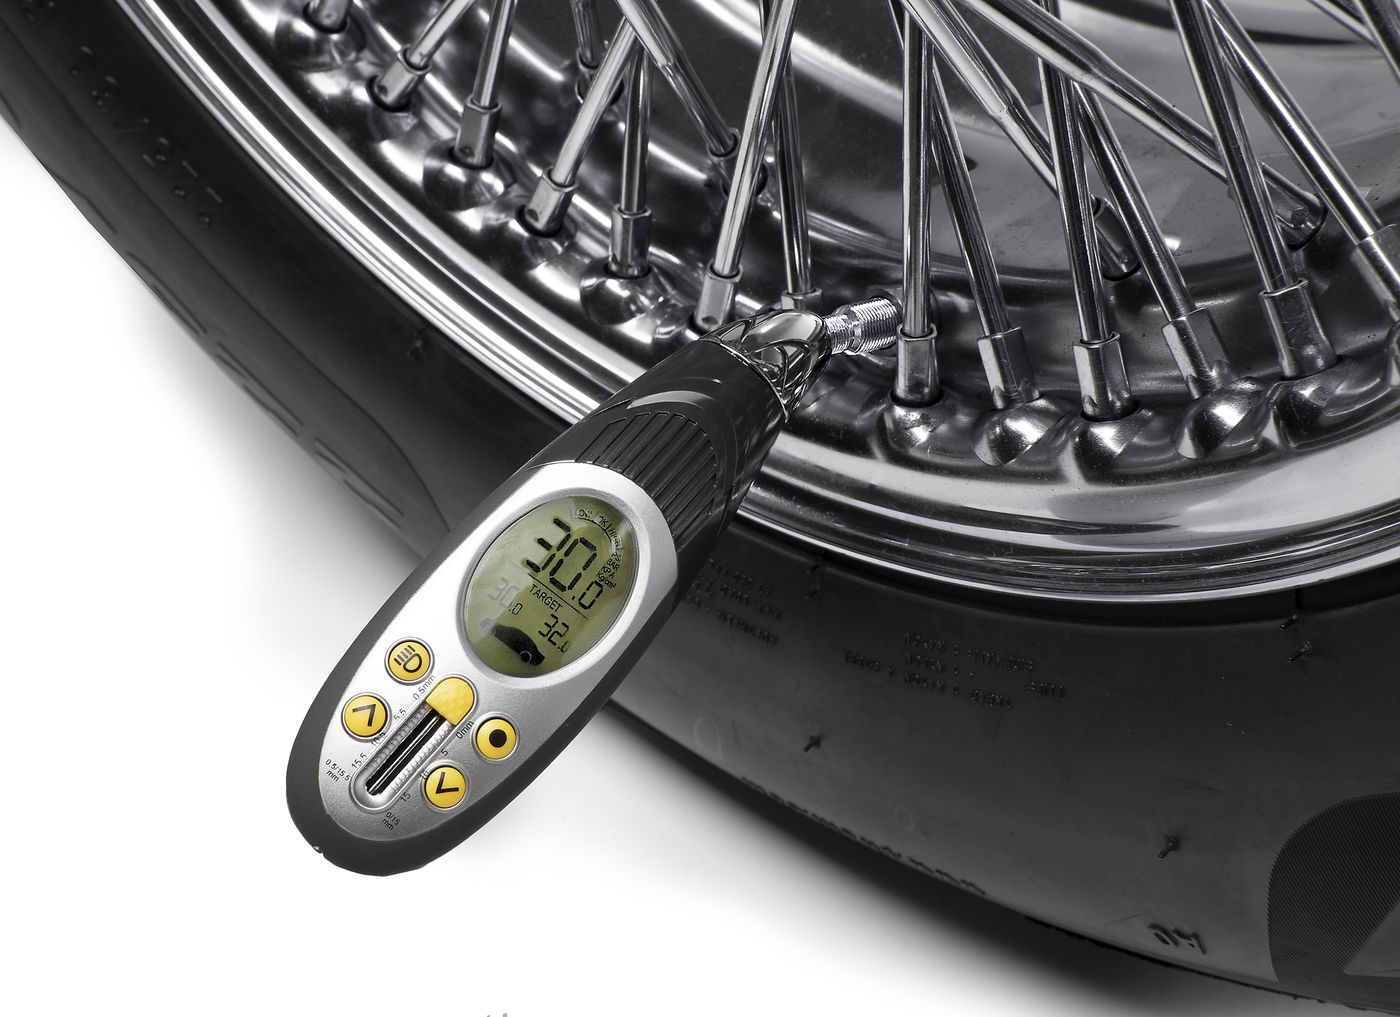 Reifendruckprüfer
Tyre pressure gauge
Instrument de la pression